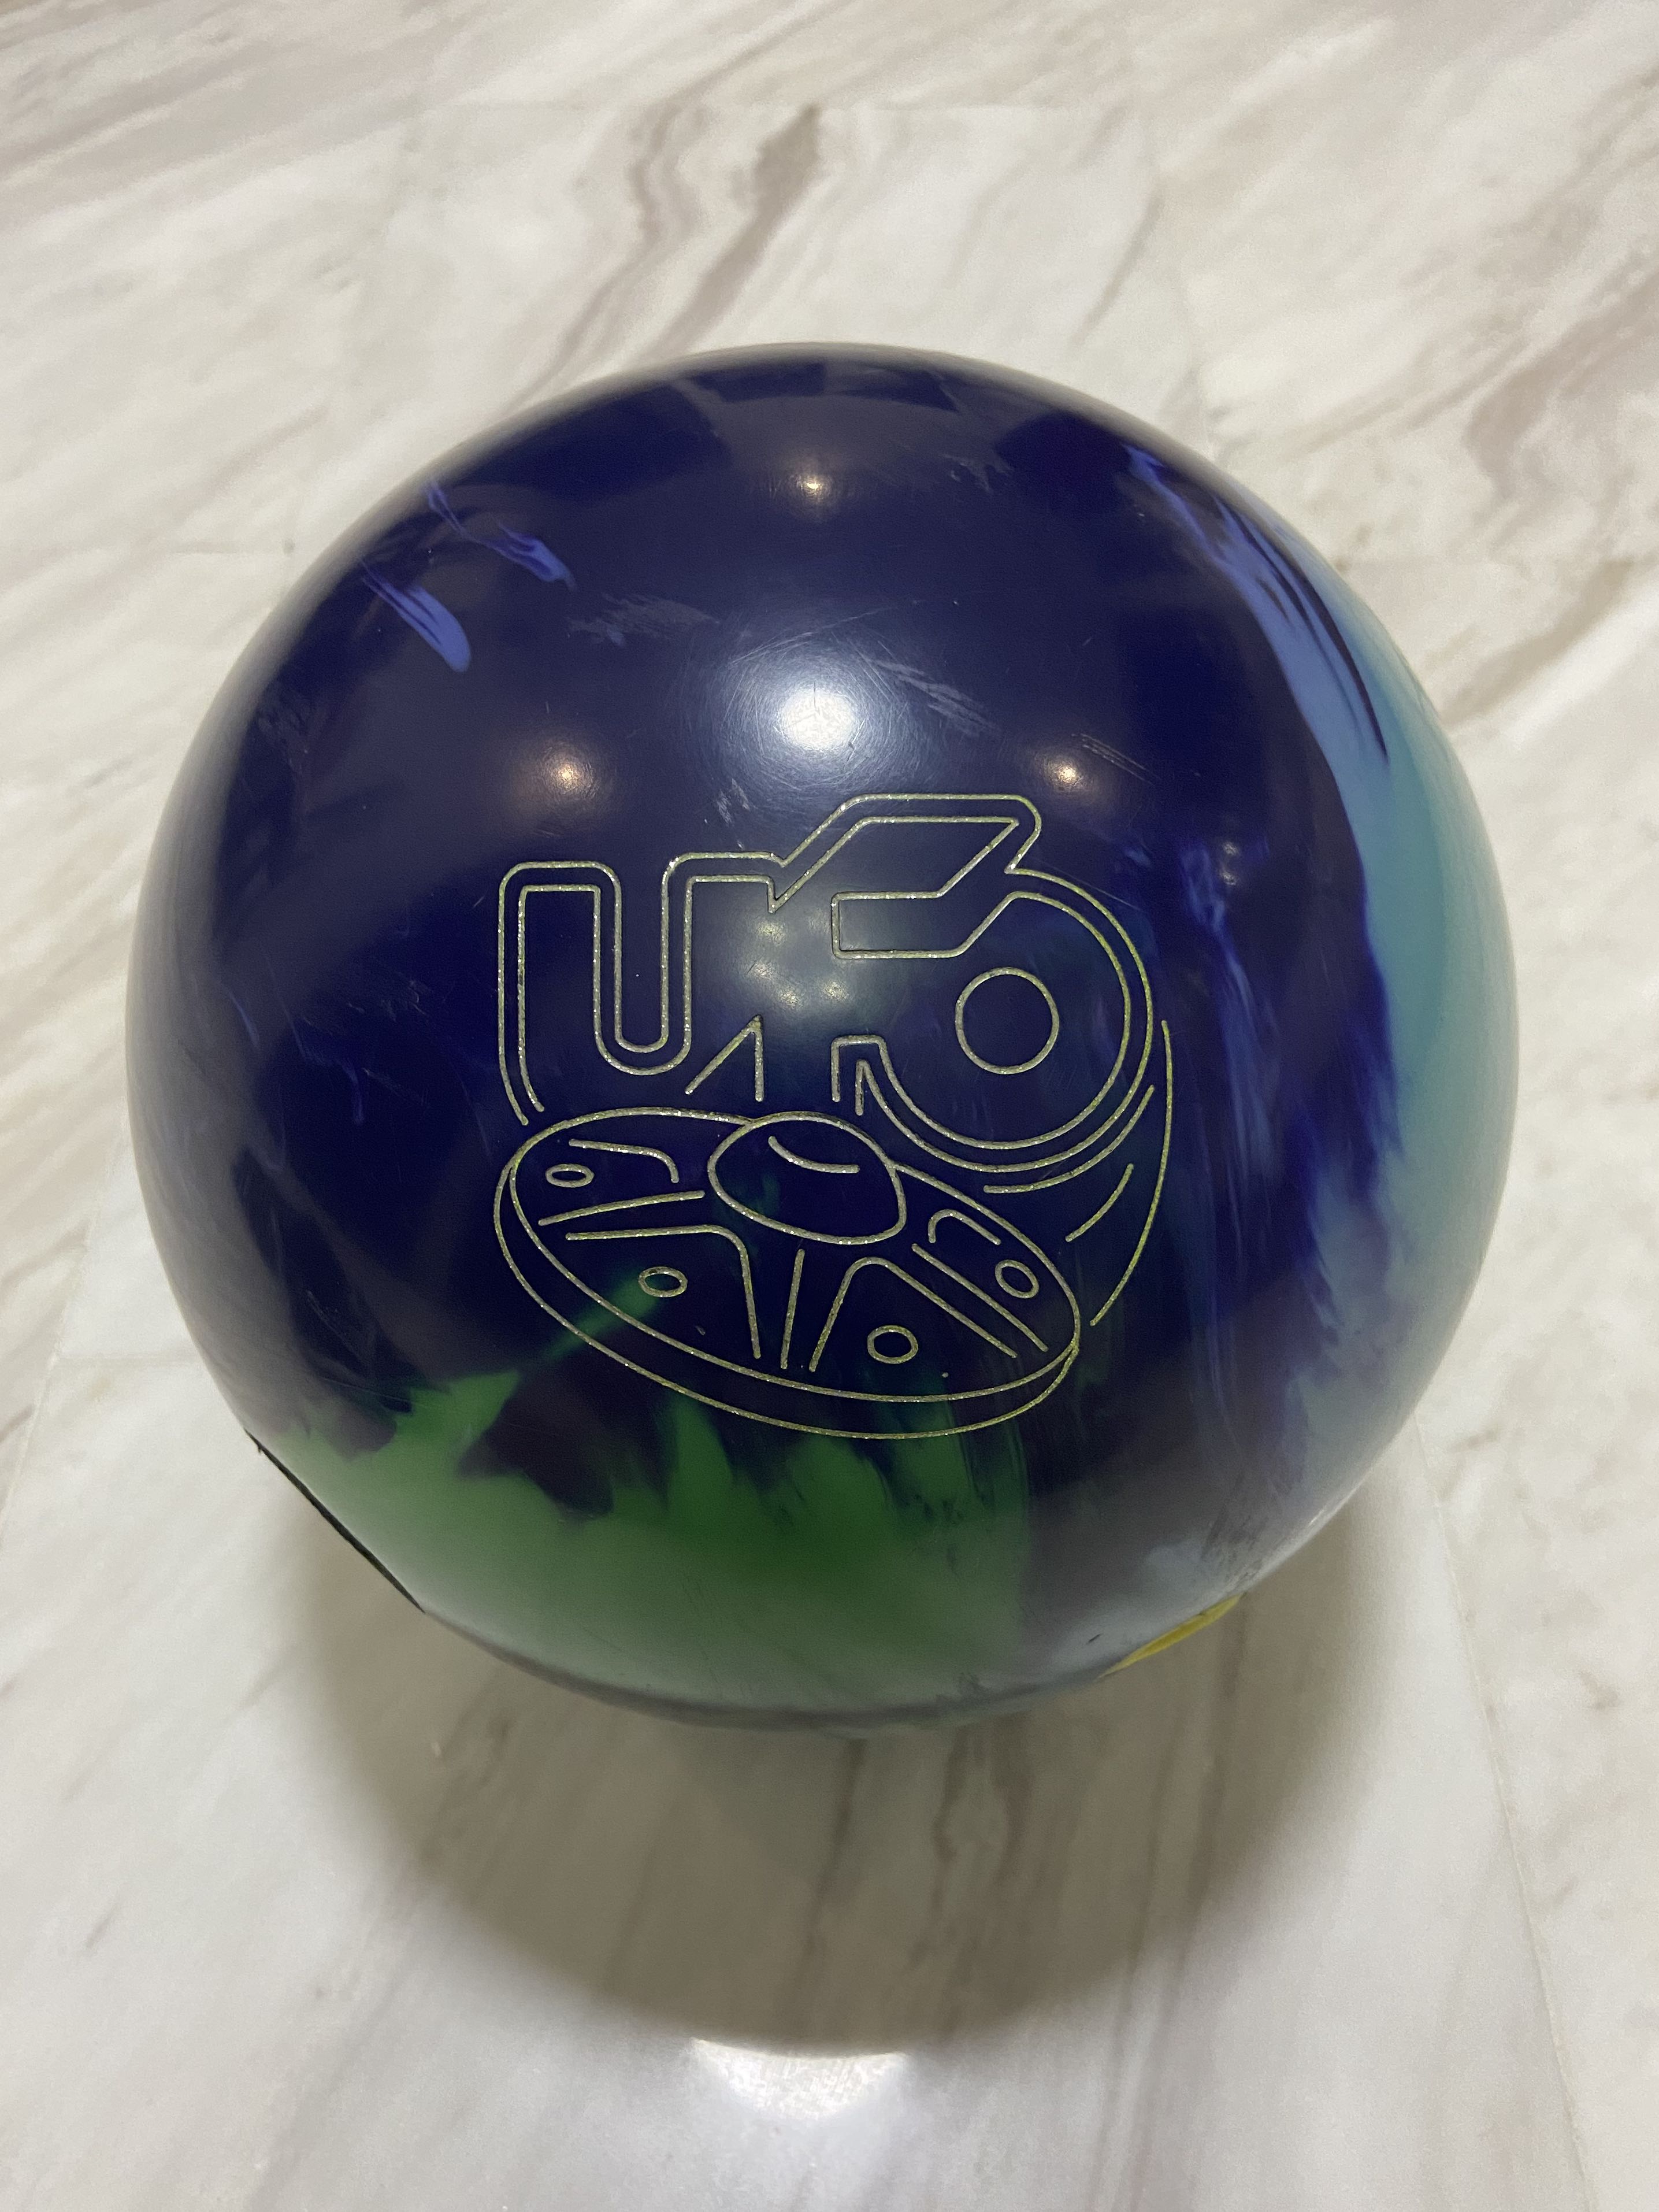 Roto Grip UFO Bowling Ball, Sports Equipment, Sports & Games, Billiards ...